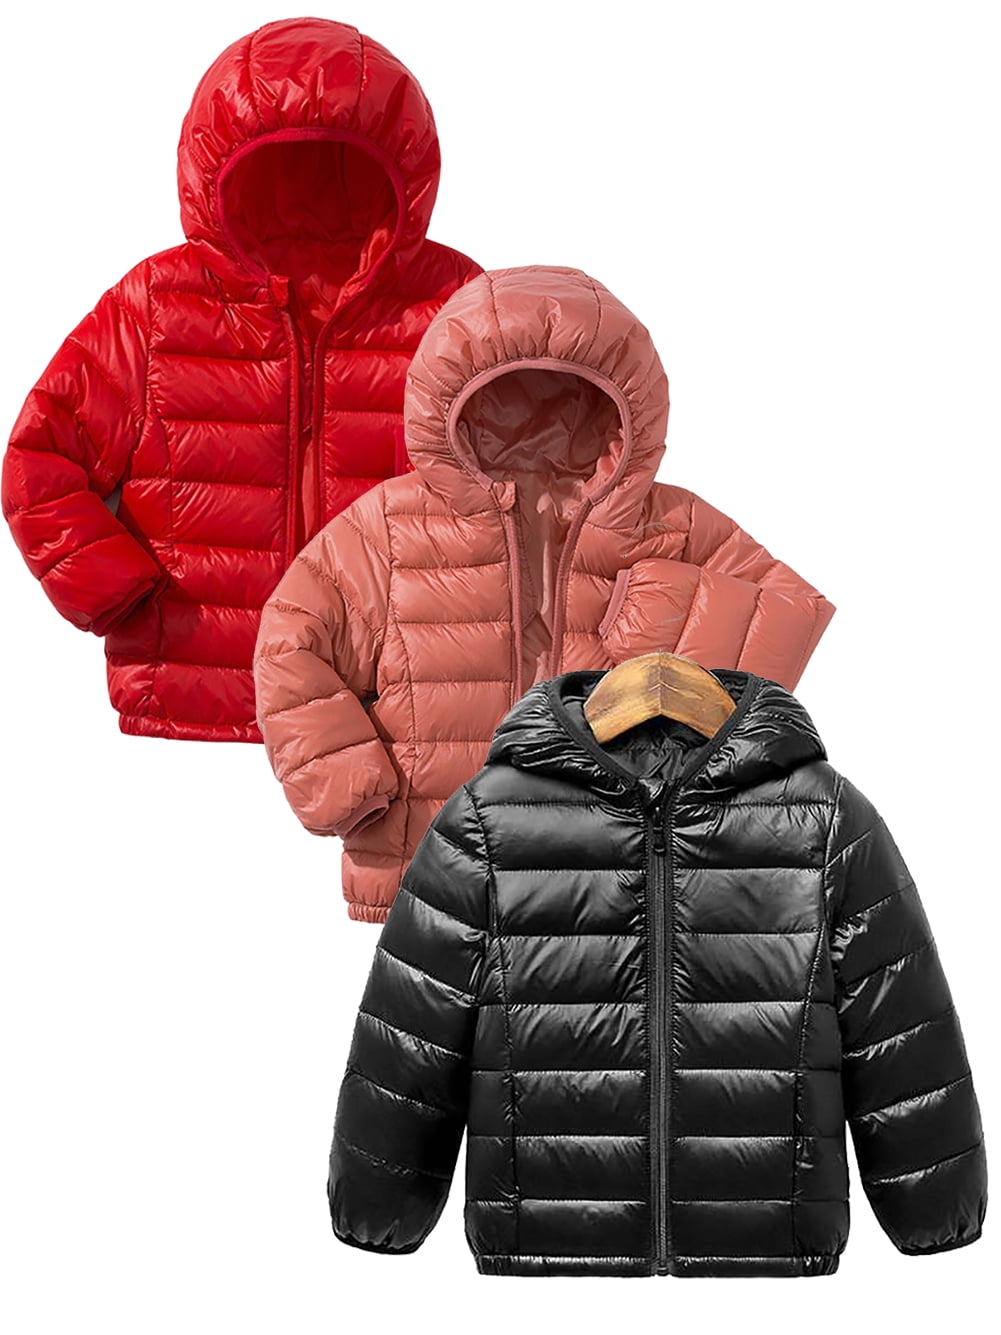 SYNPOS Kids Baby Boys Girls Winter Warm Coat Hooded Lightweight Down ...